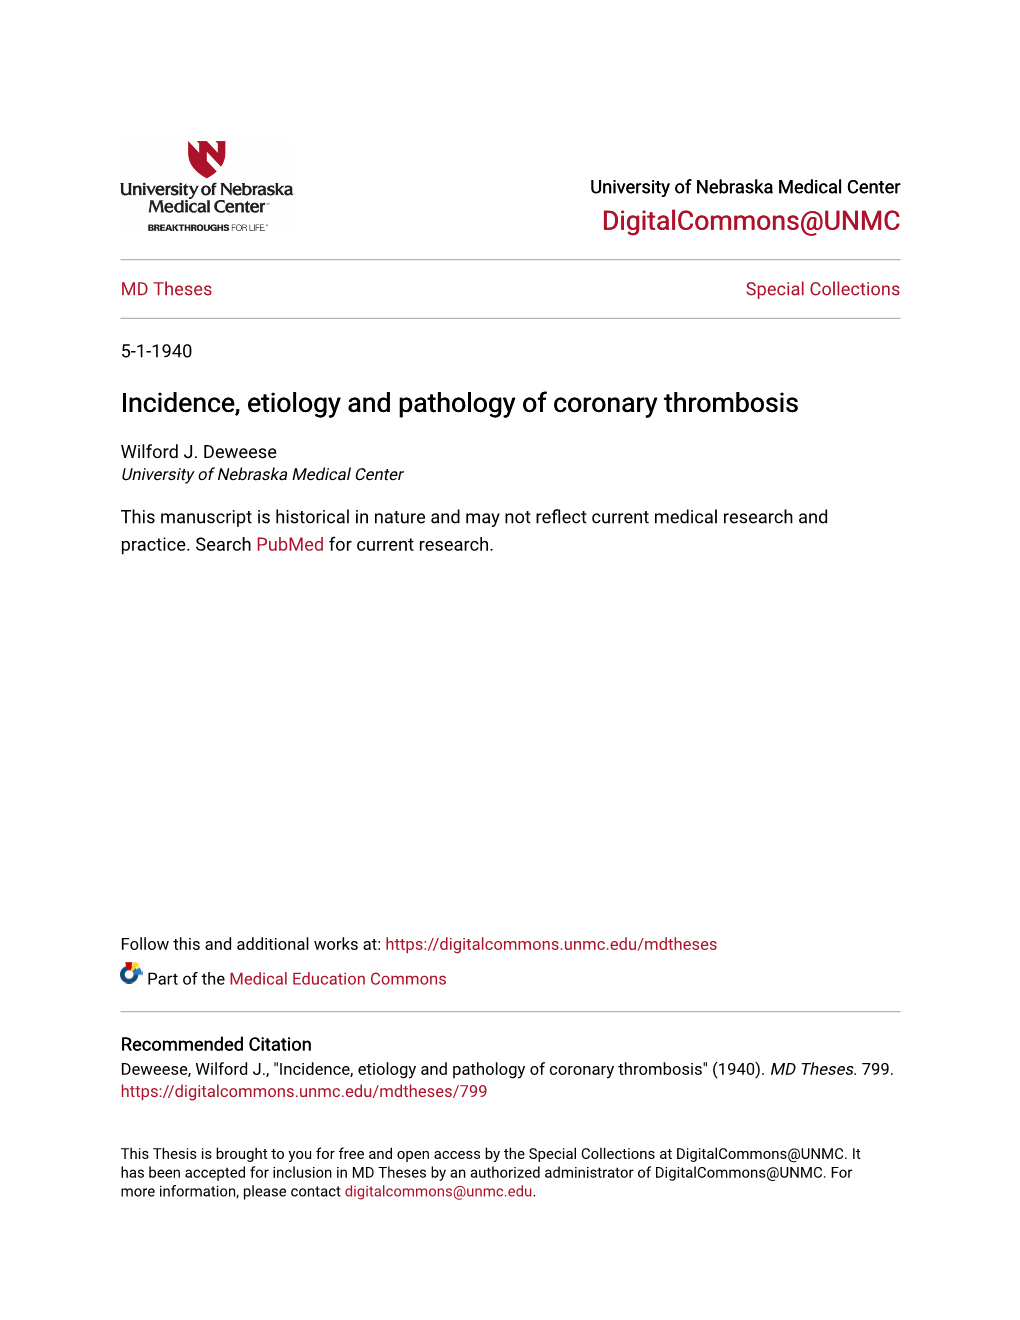 Incidence, Etiology and Pathology of Coronary Thrombosis